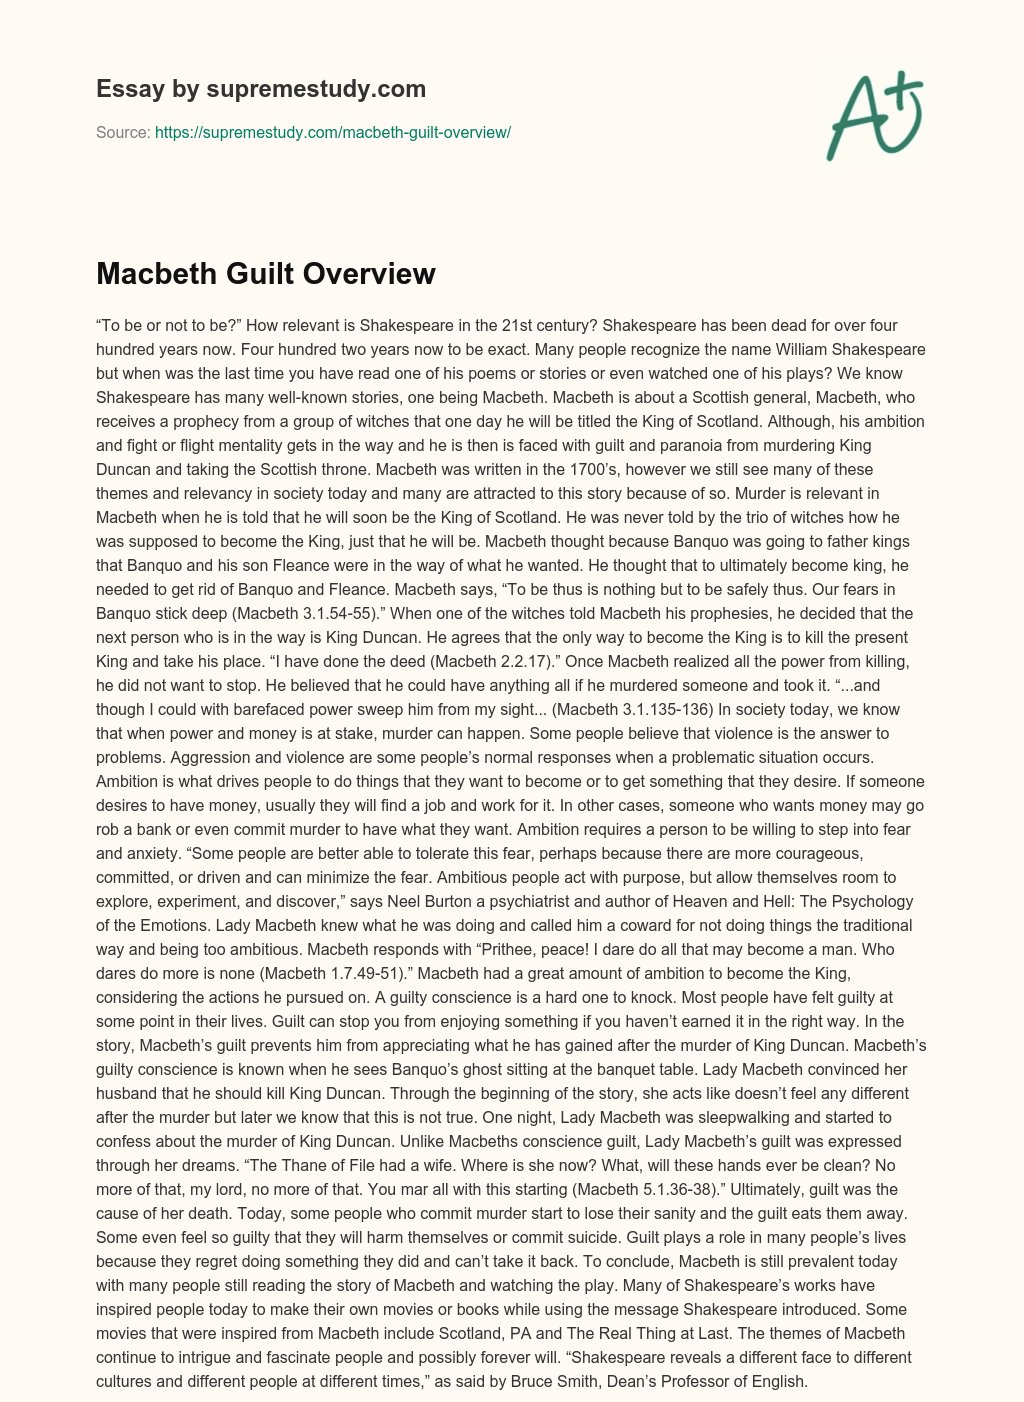 macbeth theme of guilt essay